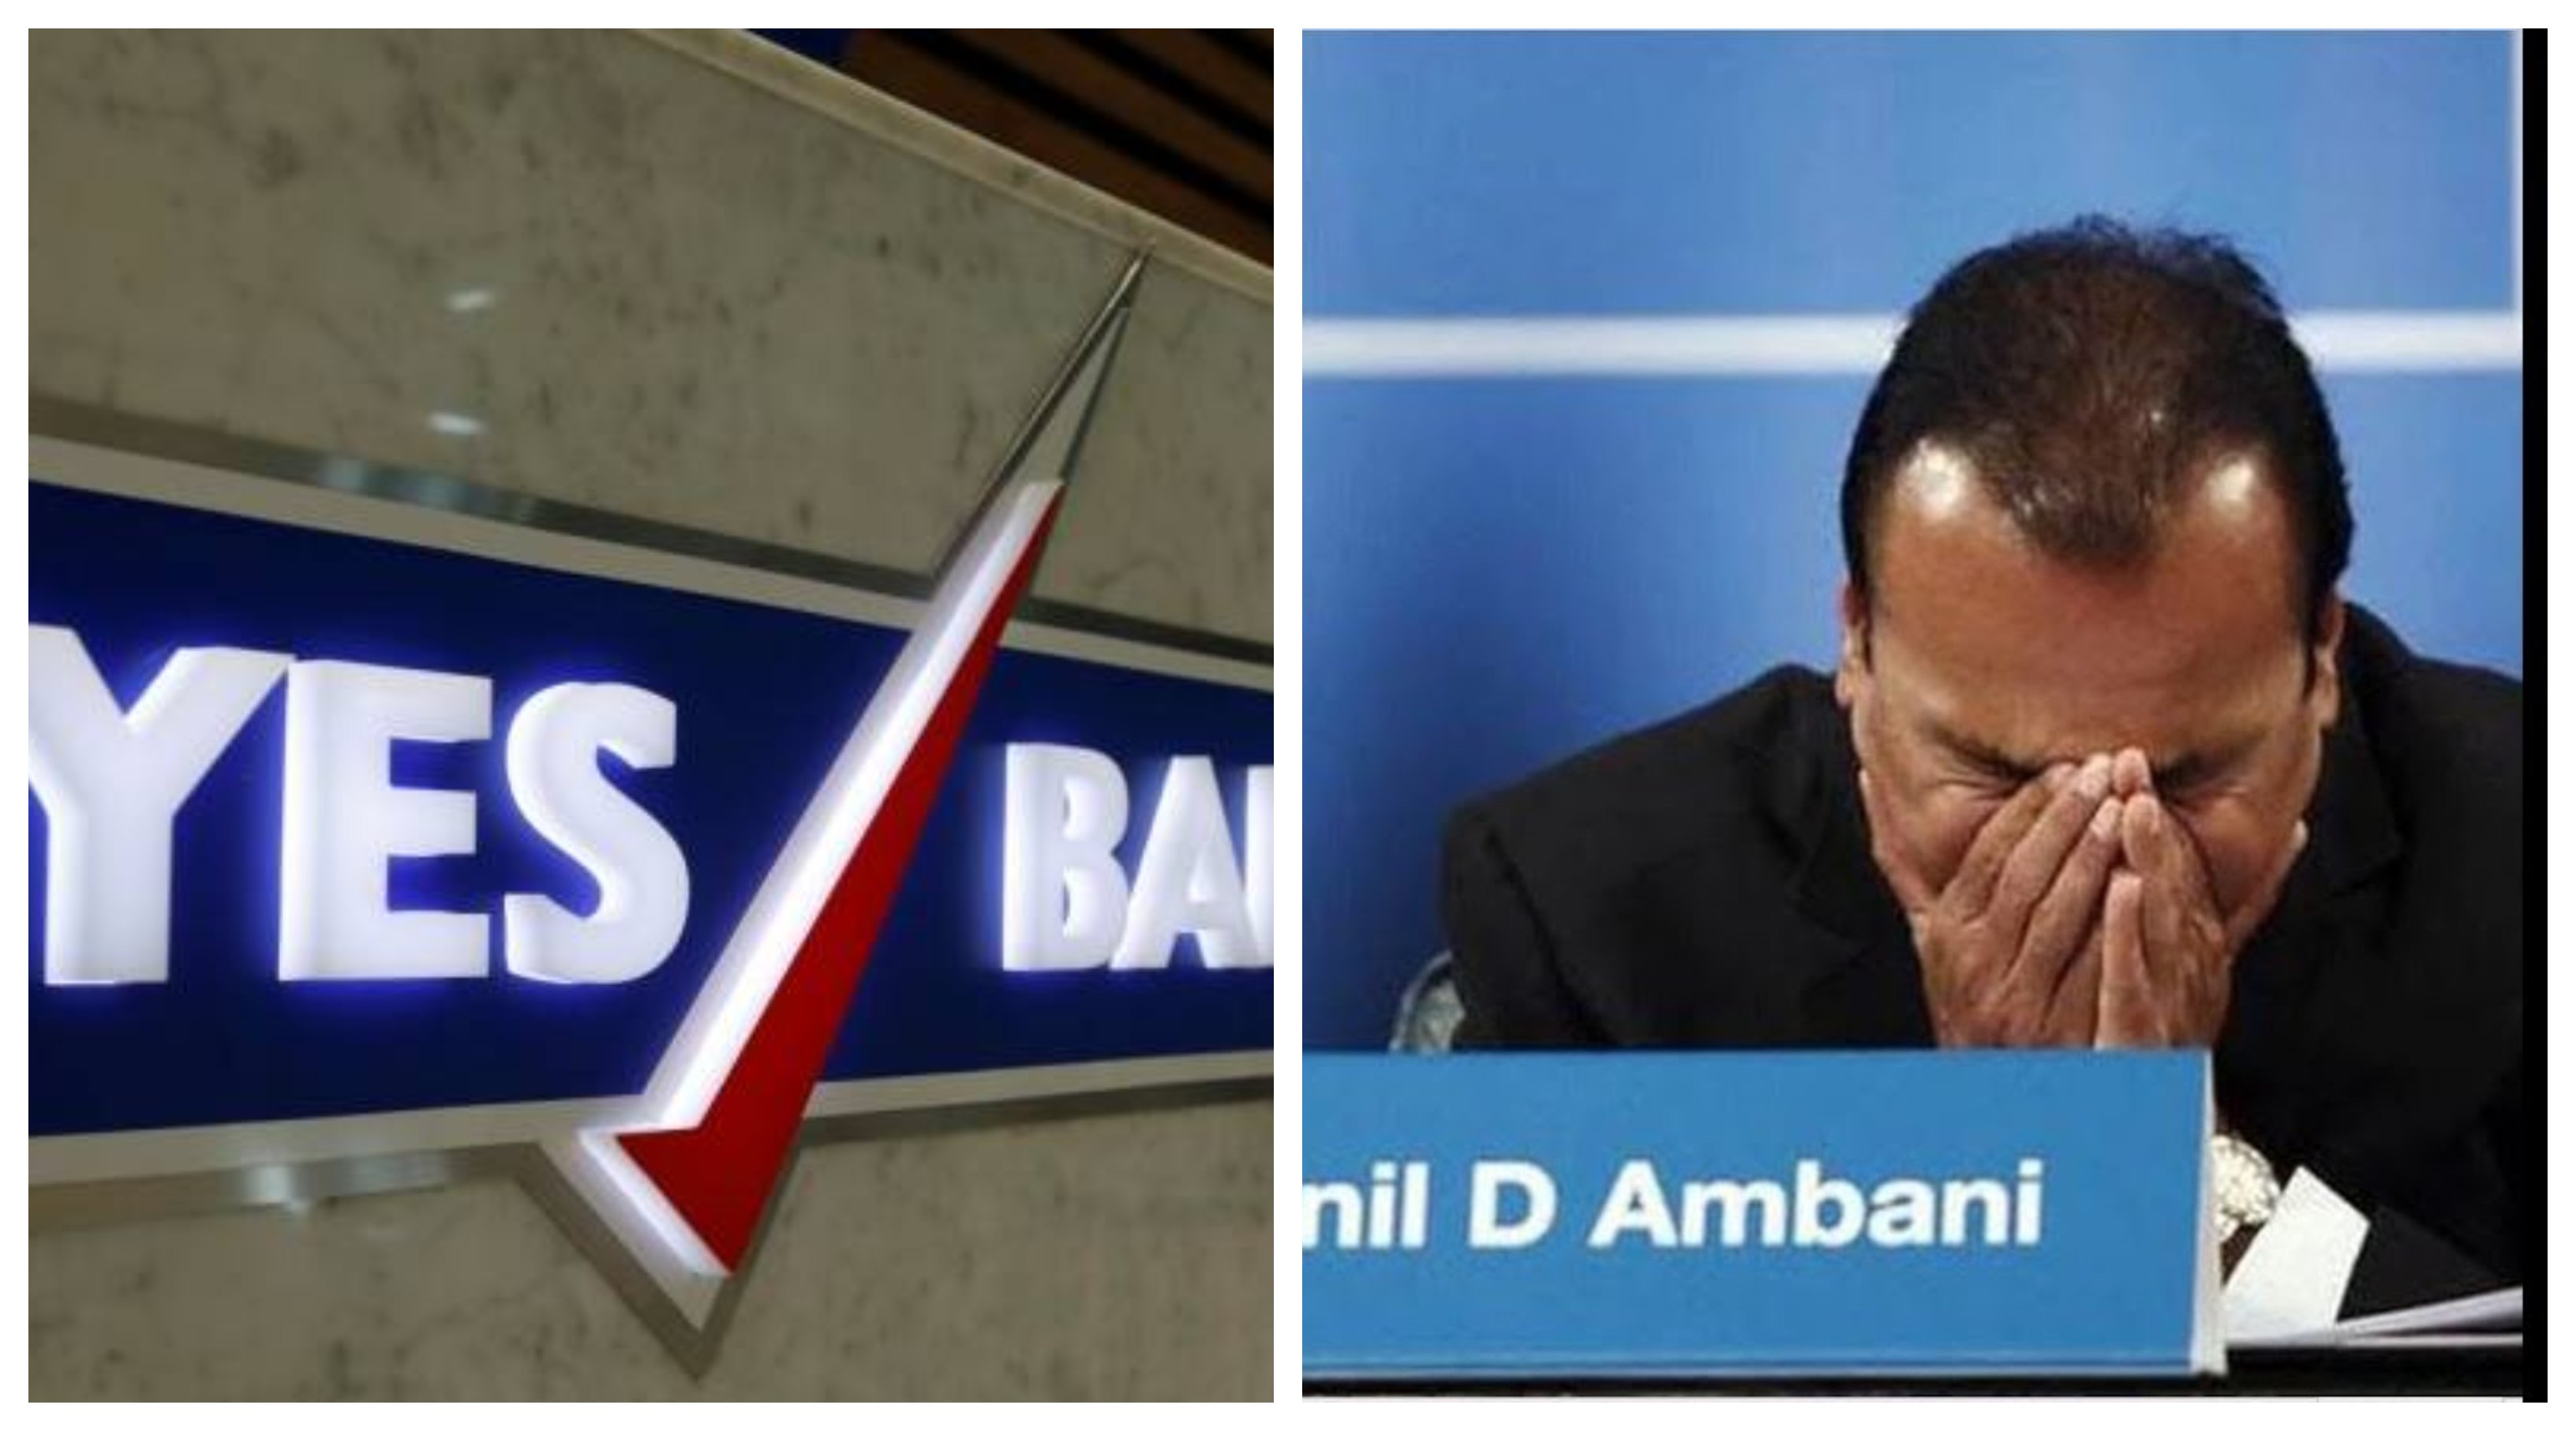 Anil Ambani yes bank debt